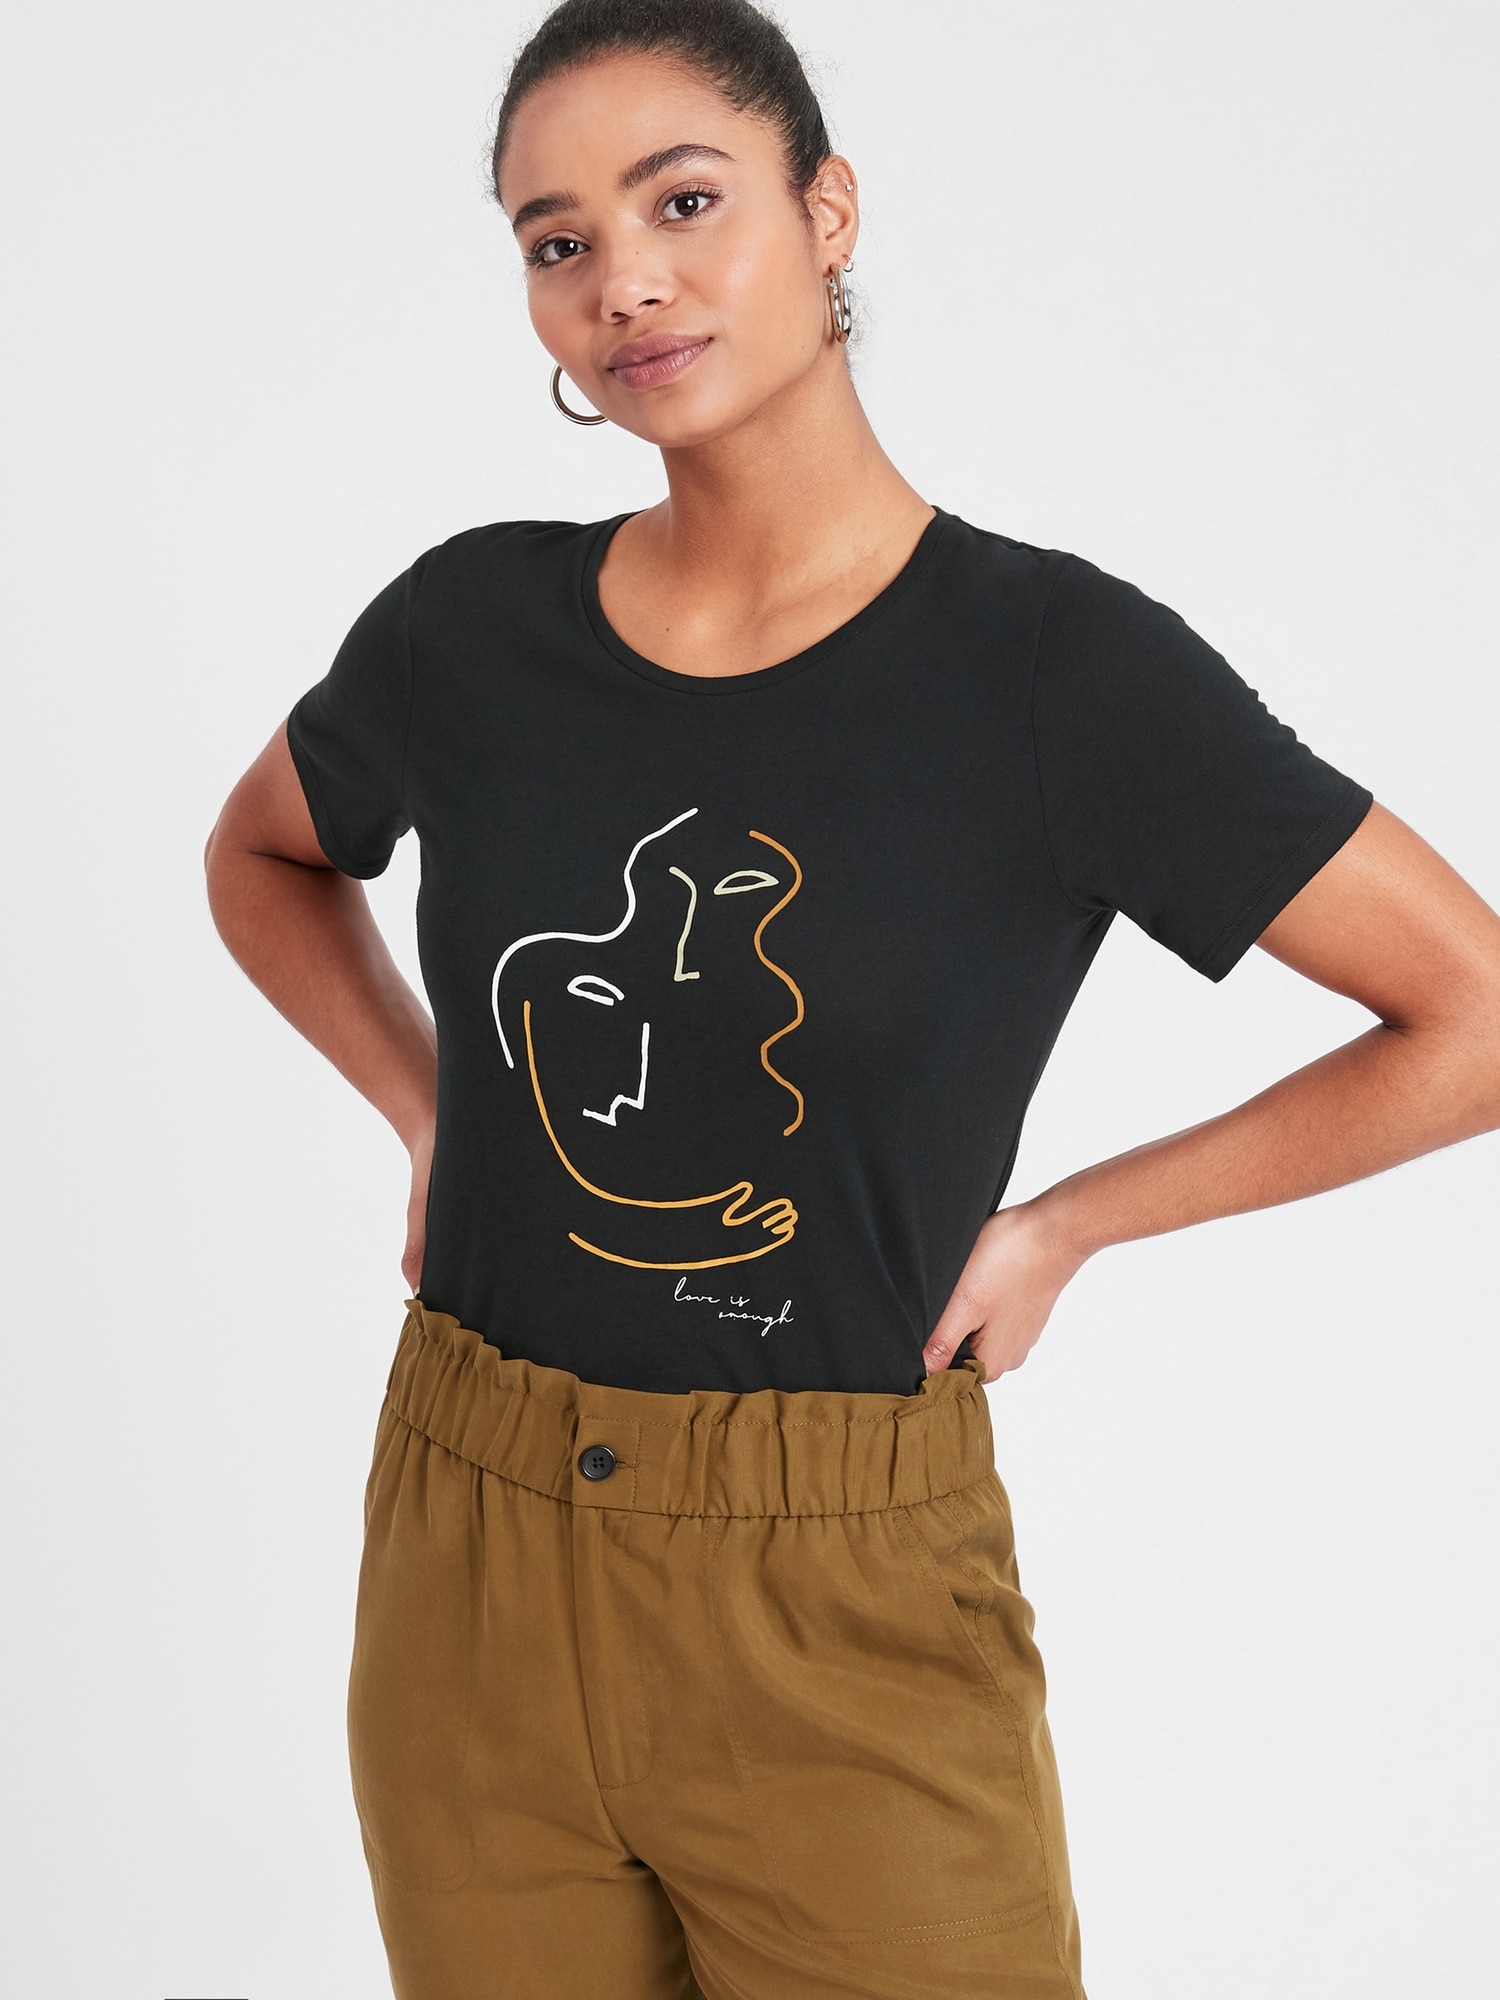 Women's Day Graphic T-Shirt